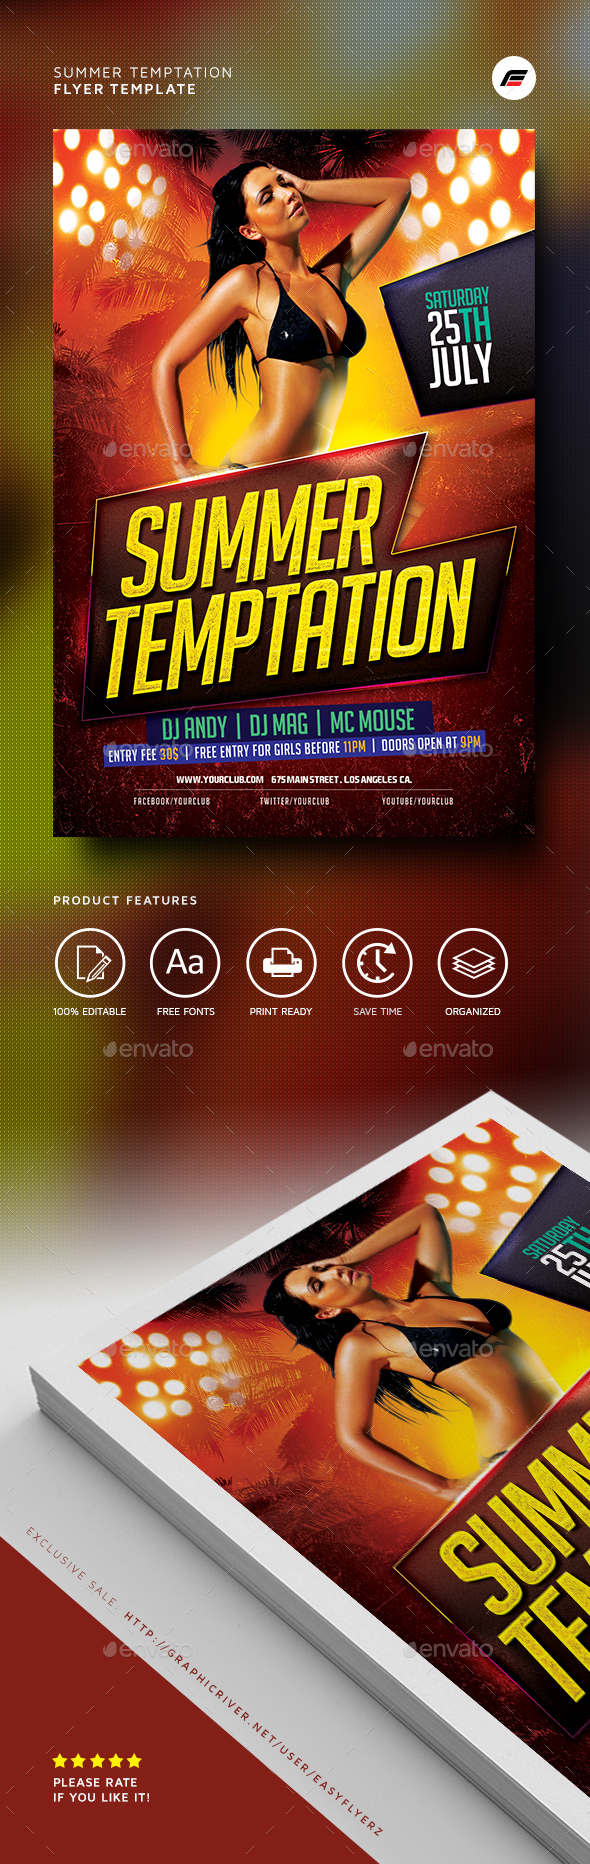 Summer Temptation Flyer Template